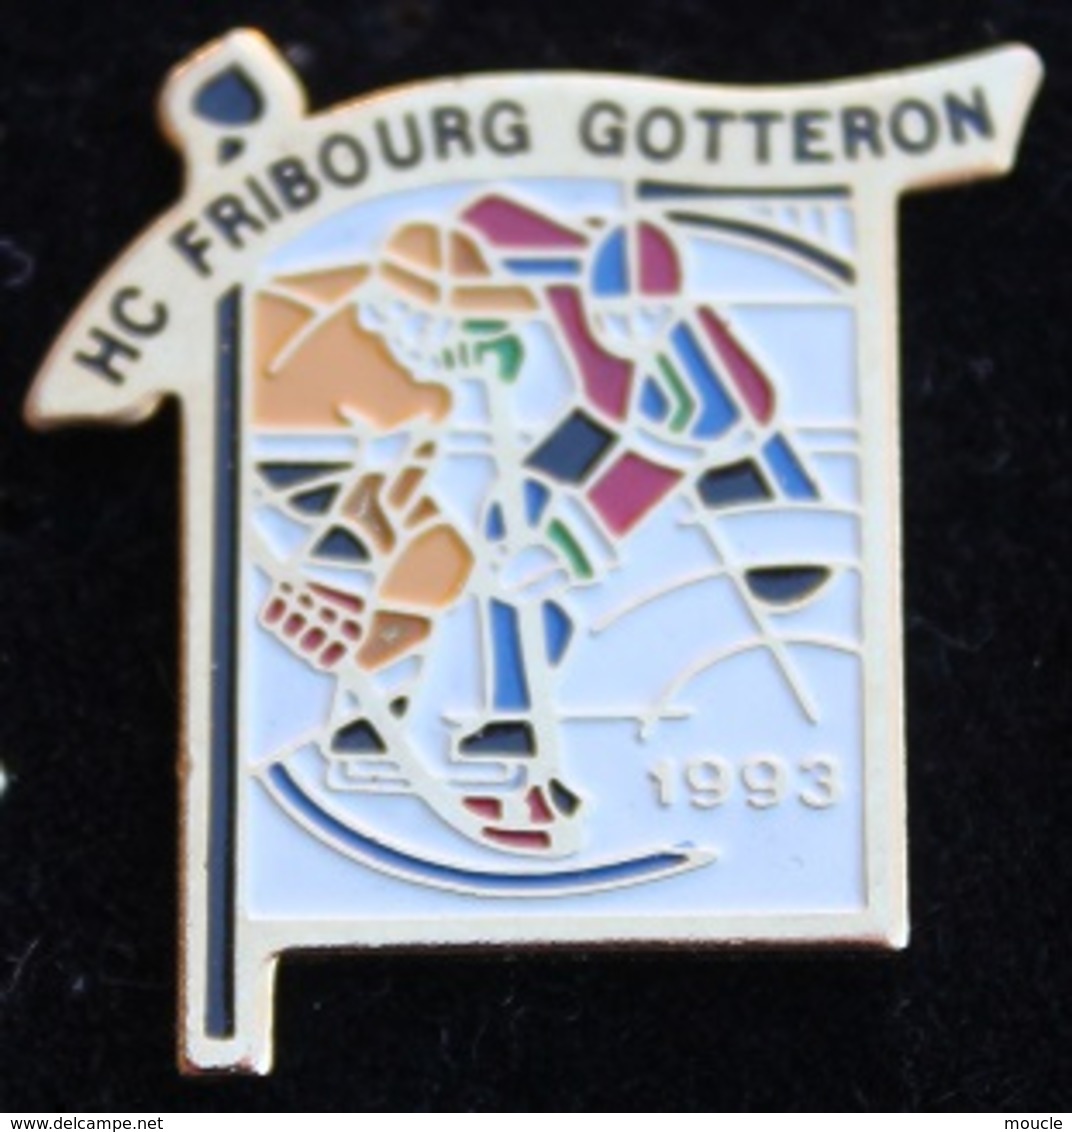 HOCKEY CLUB FRIBOUG GOTTERON - 1993 - JOUEURS -  HOCKEY SUR GLACE SUISSE - ICE - SCHWEIZ - SWITZERLAND -    (19) - Winter Sports